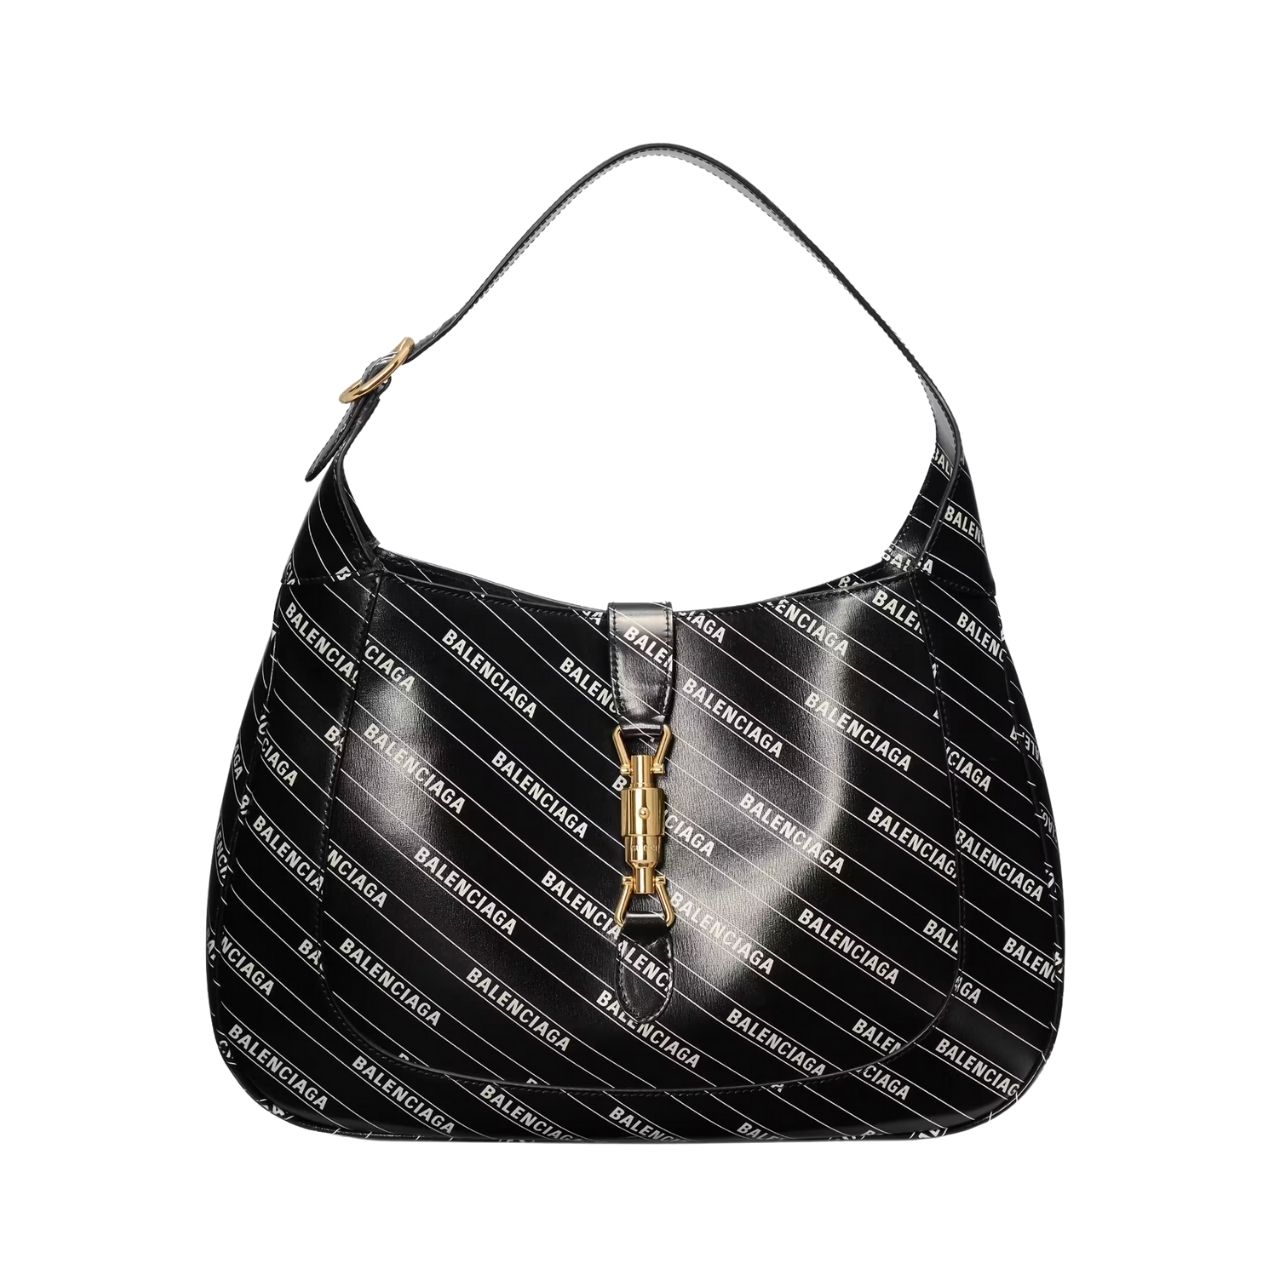 Black Gucci shoulder bag with white Balenciaga lettering